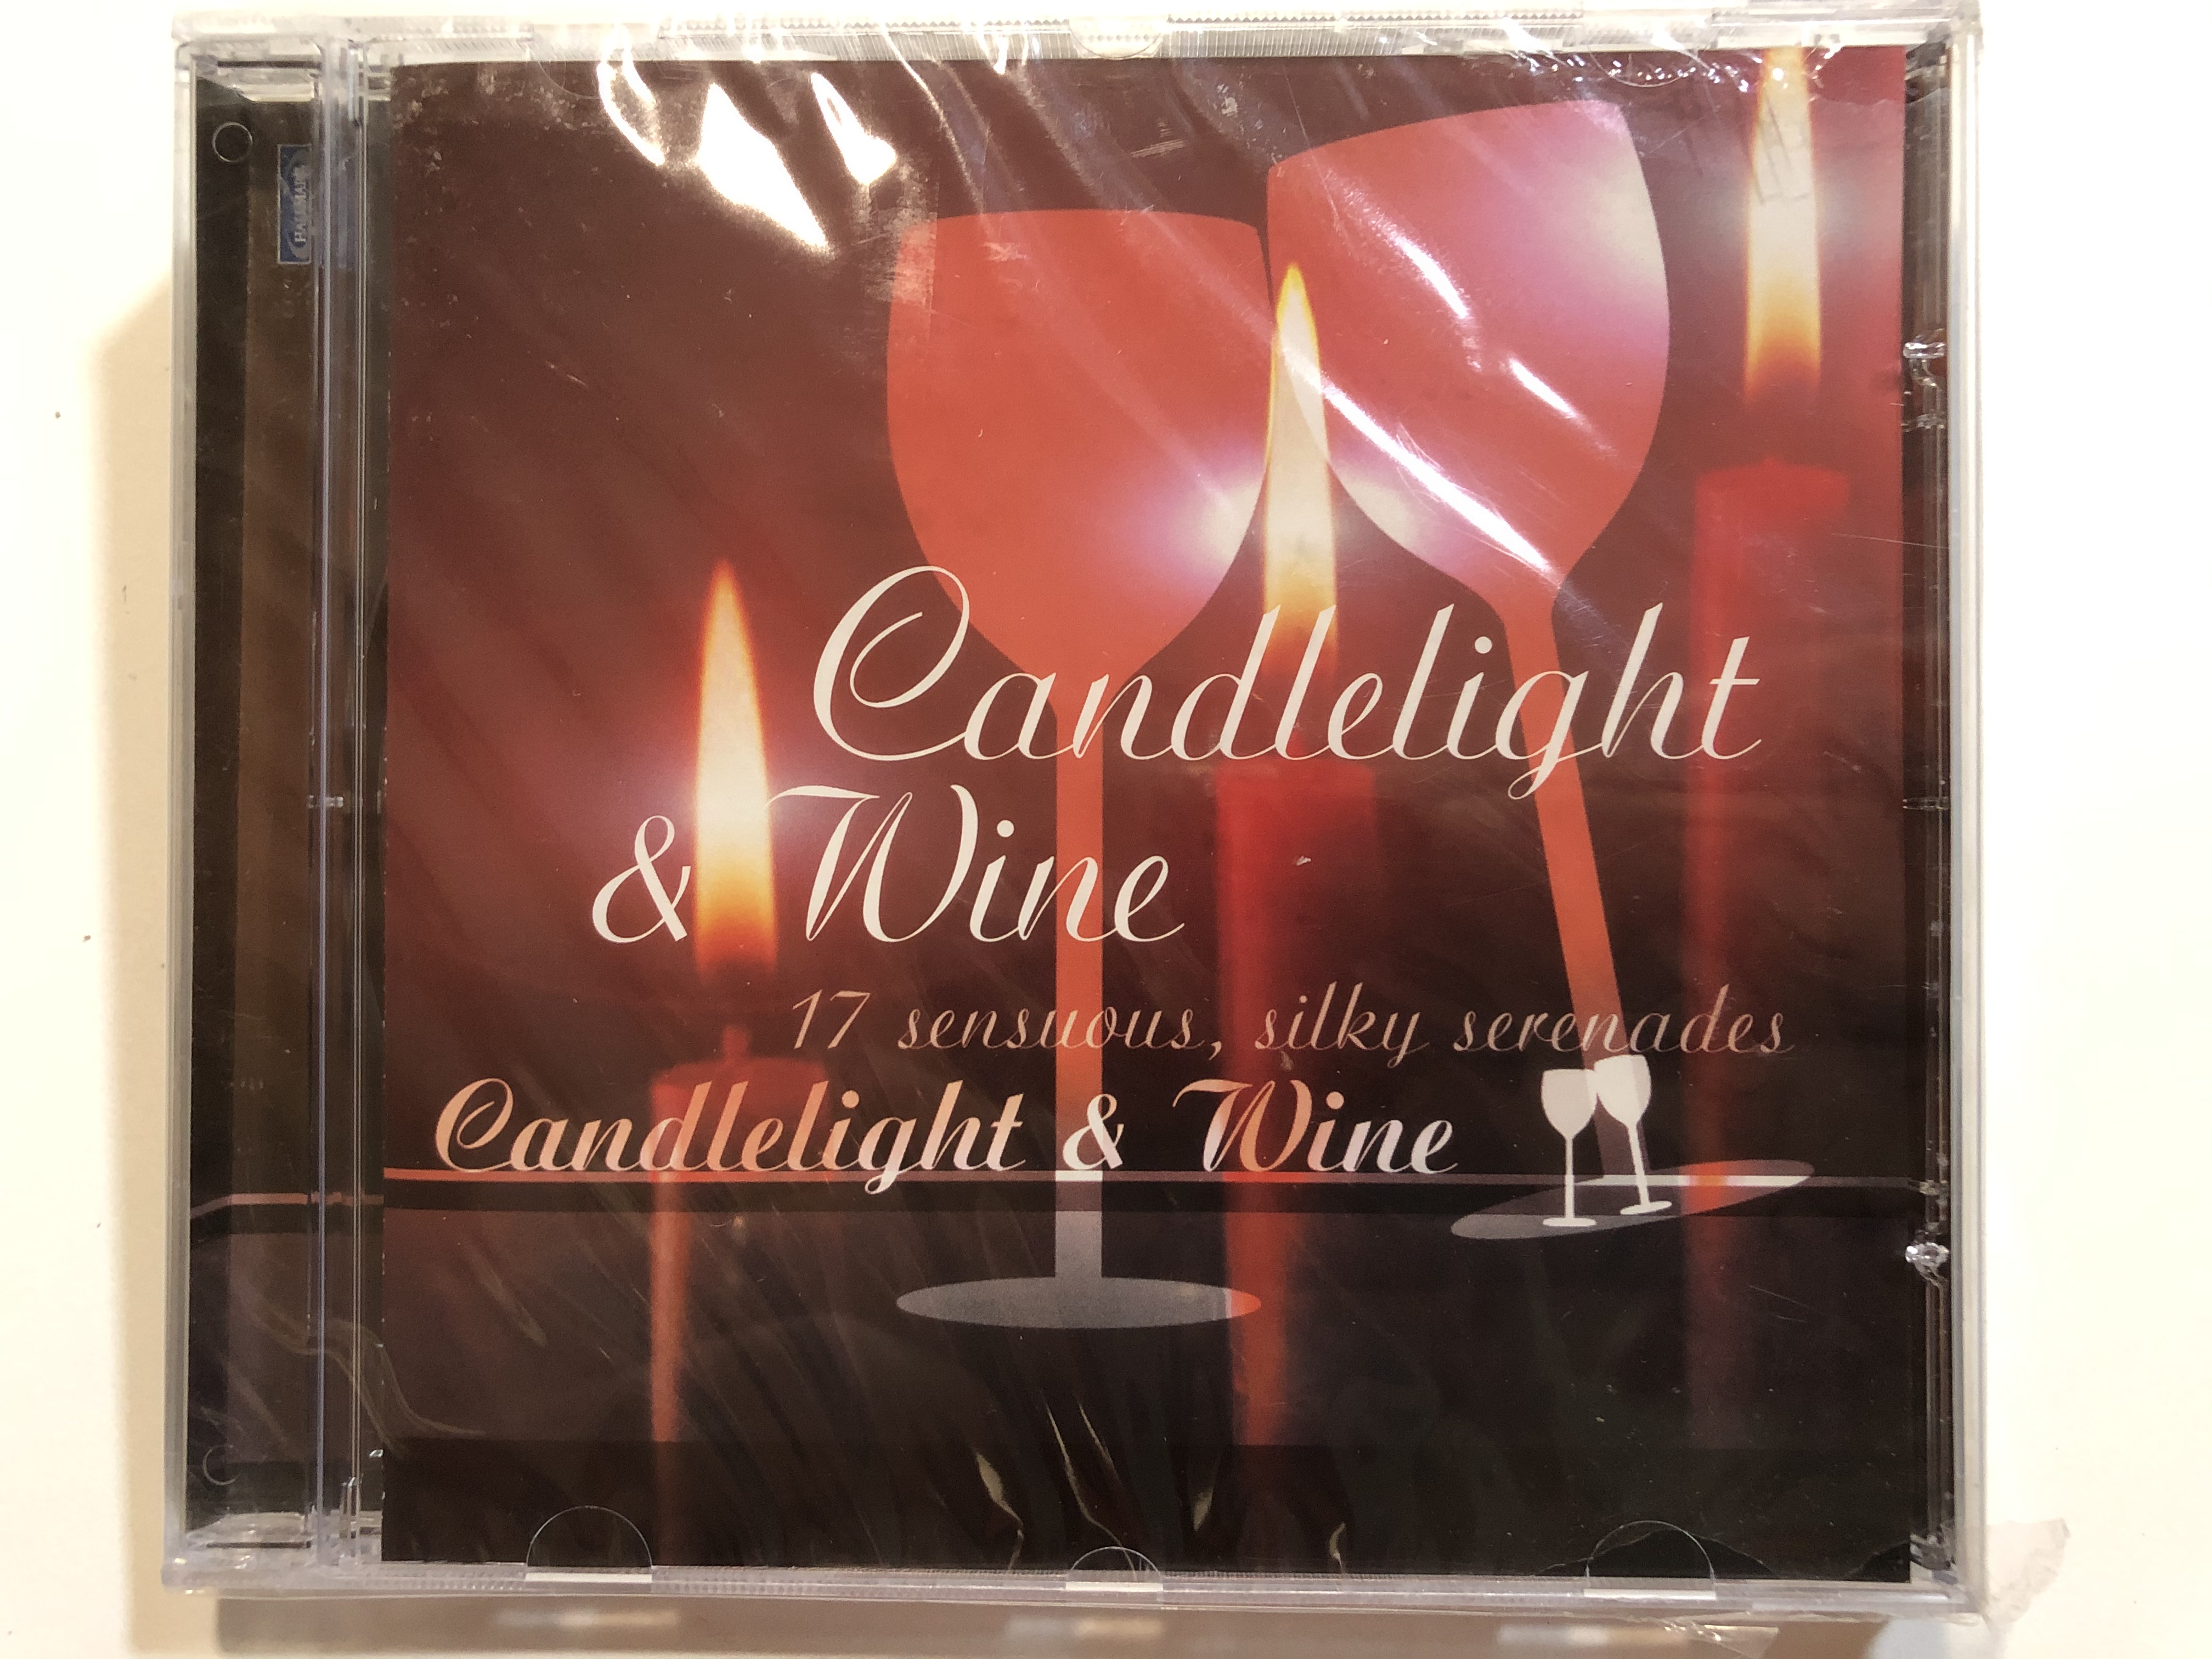 candlelight-wine-17-sensuous-silky-serenades-hallmark-audio-cd-2002-700832-1-.jpg